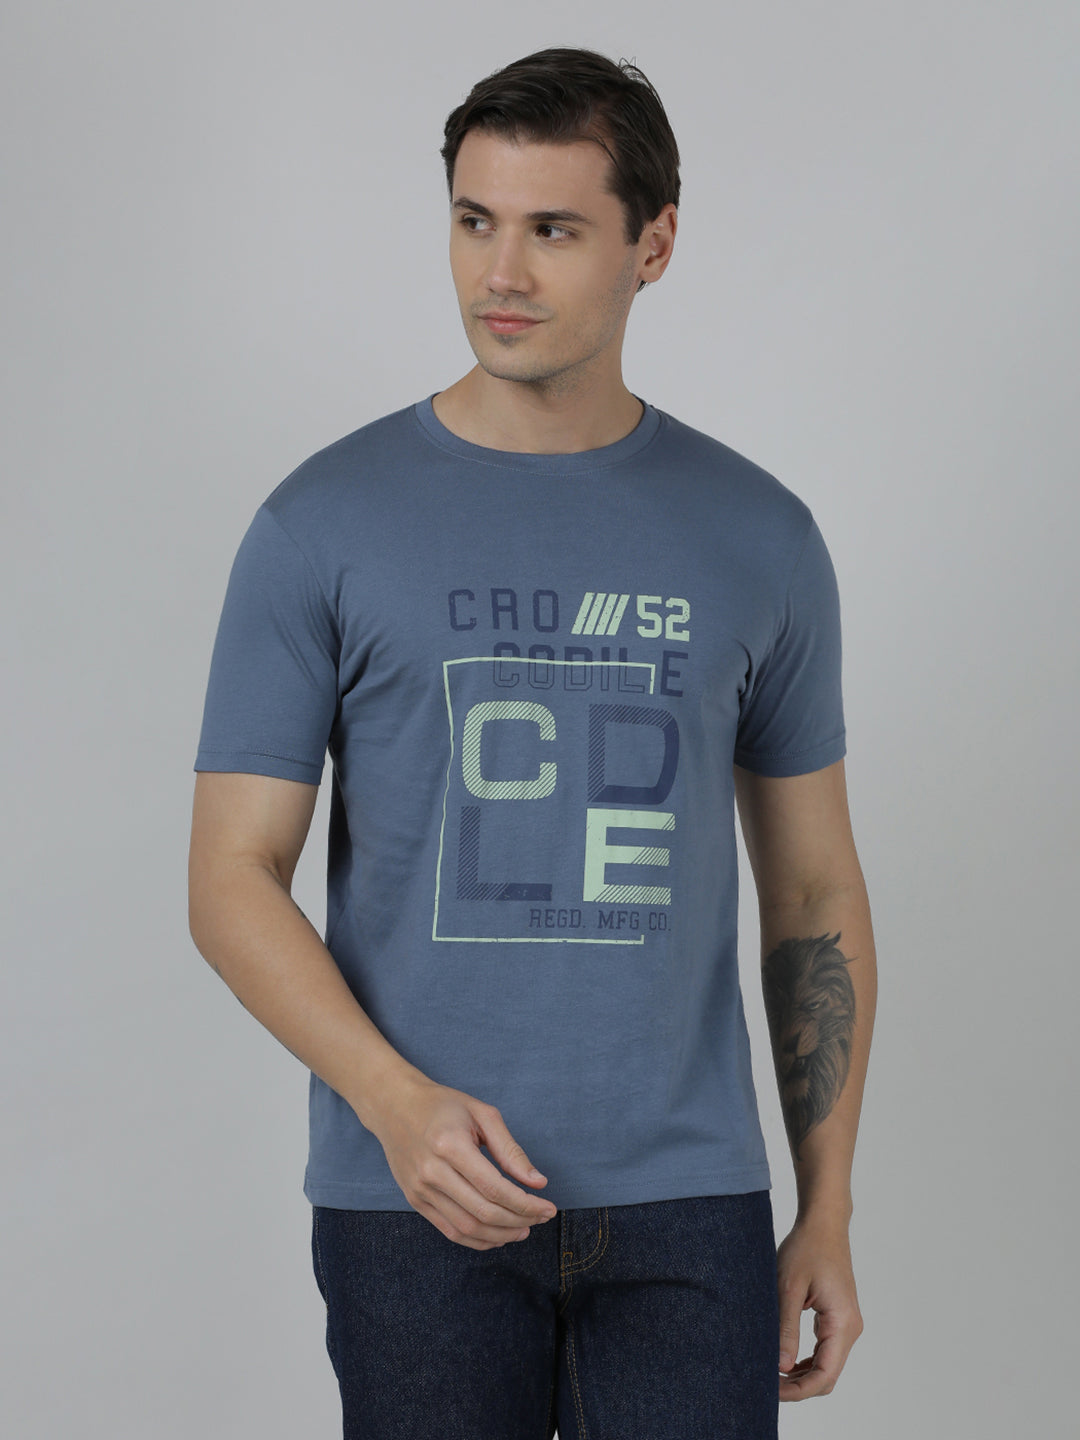 Men's Printed Round Neck Half Sleeve Cotton T-Shirt - CHINA BLUE/GREY MELANGE